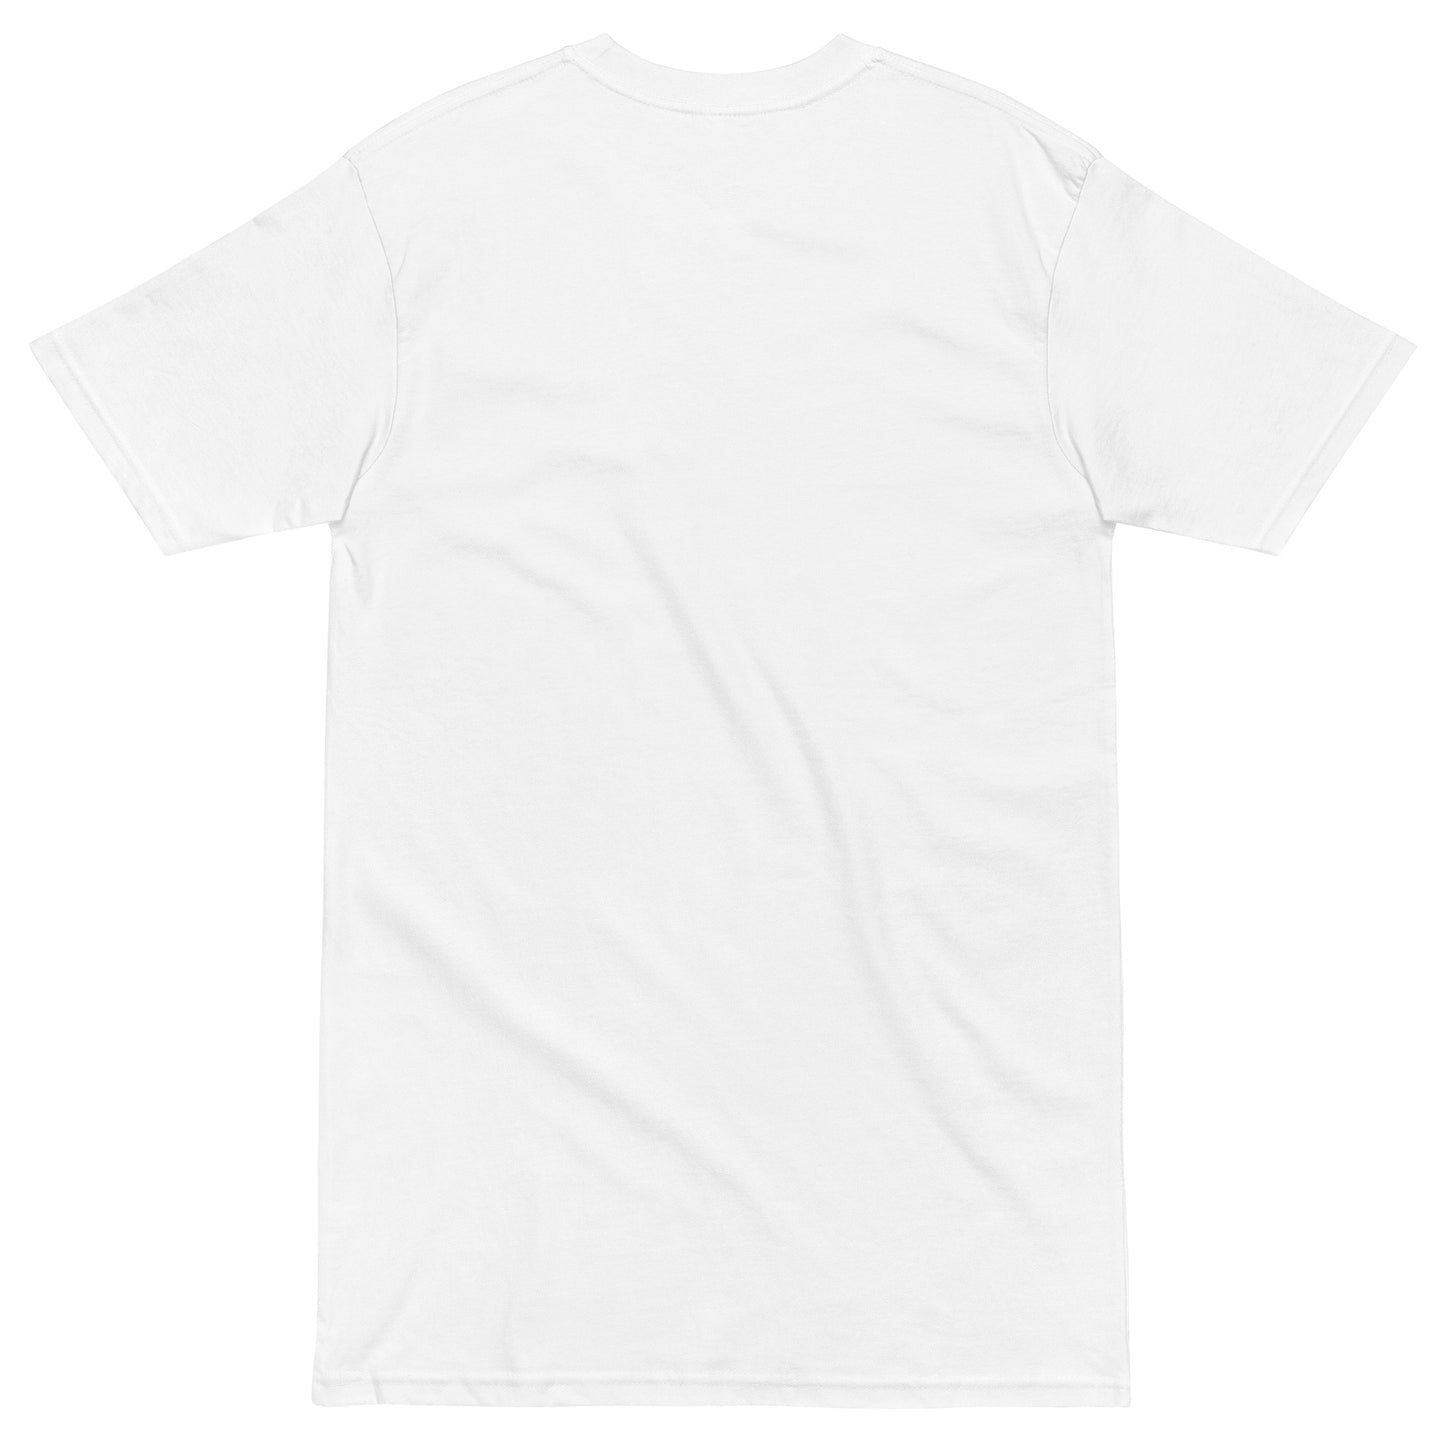 Printed Large Center Unisex Premium Heavyweight Tee / T-shirt "Hangover"